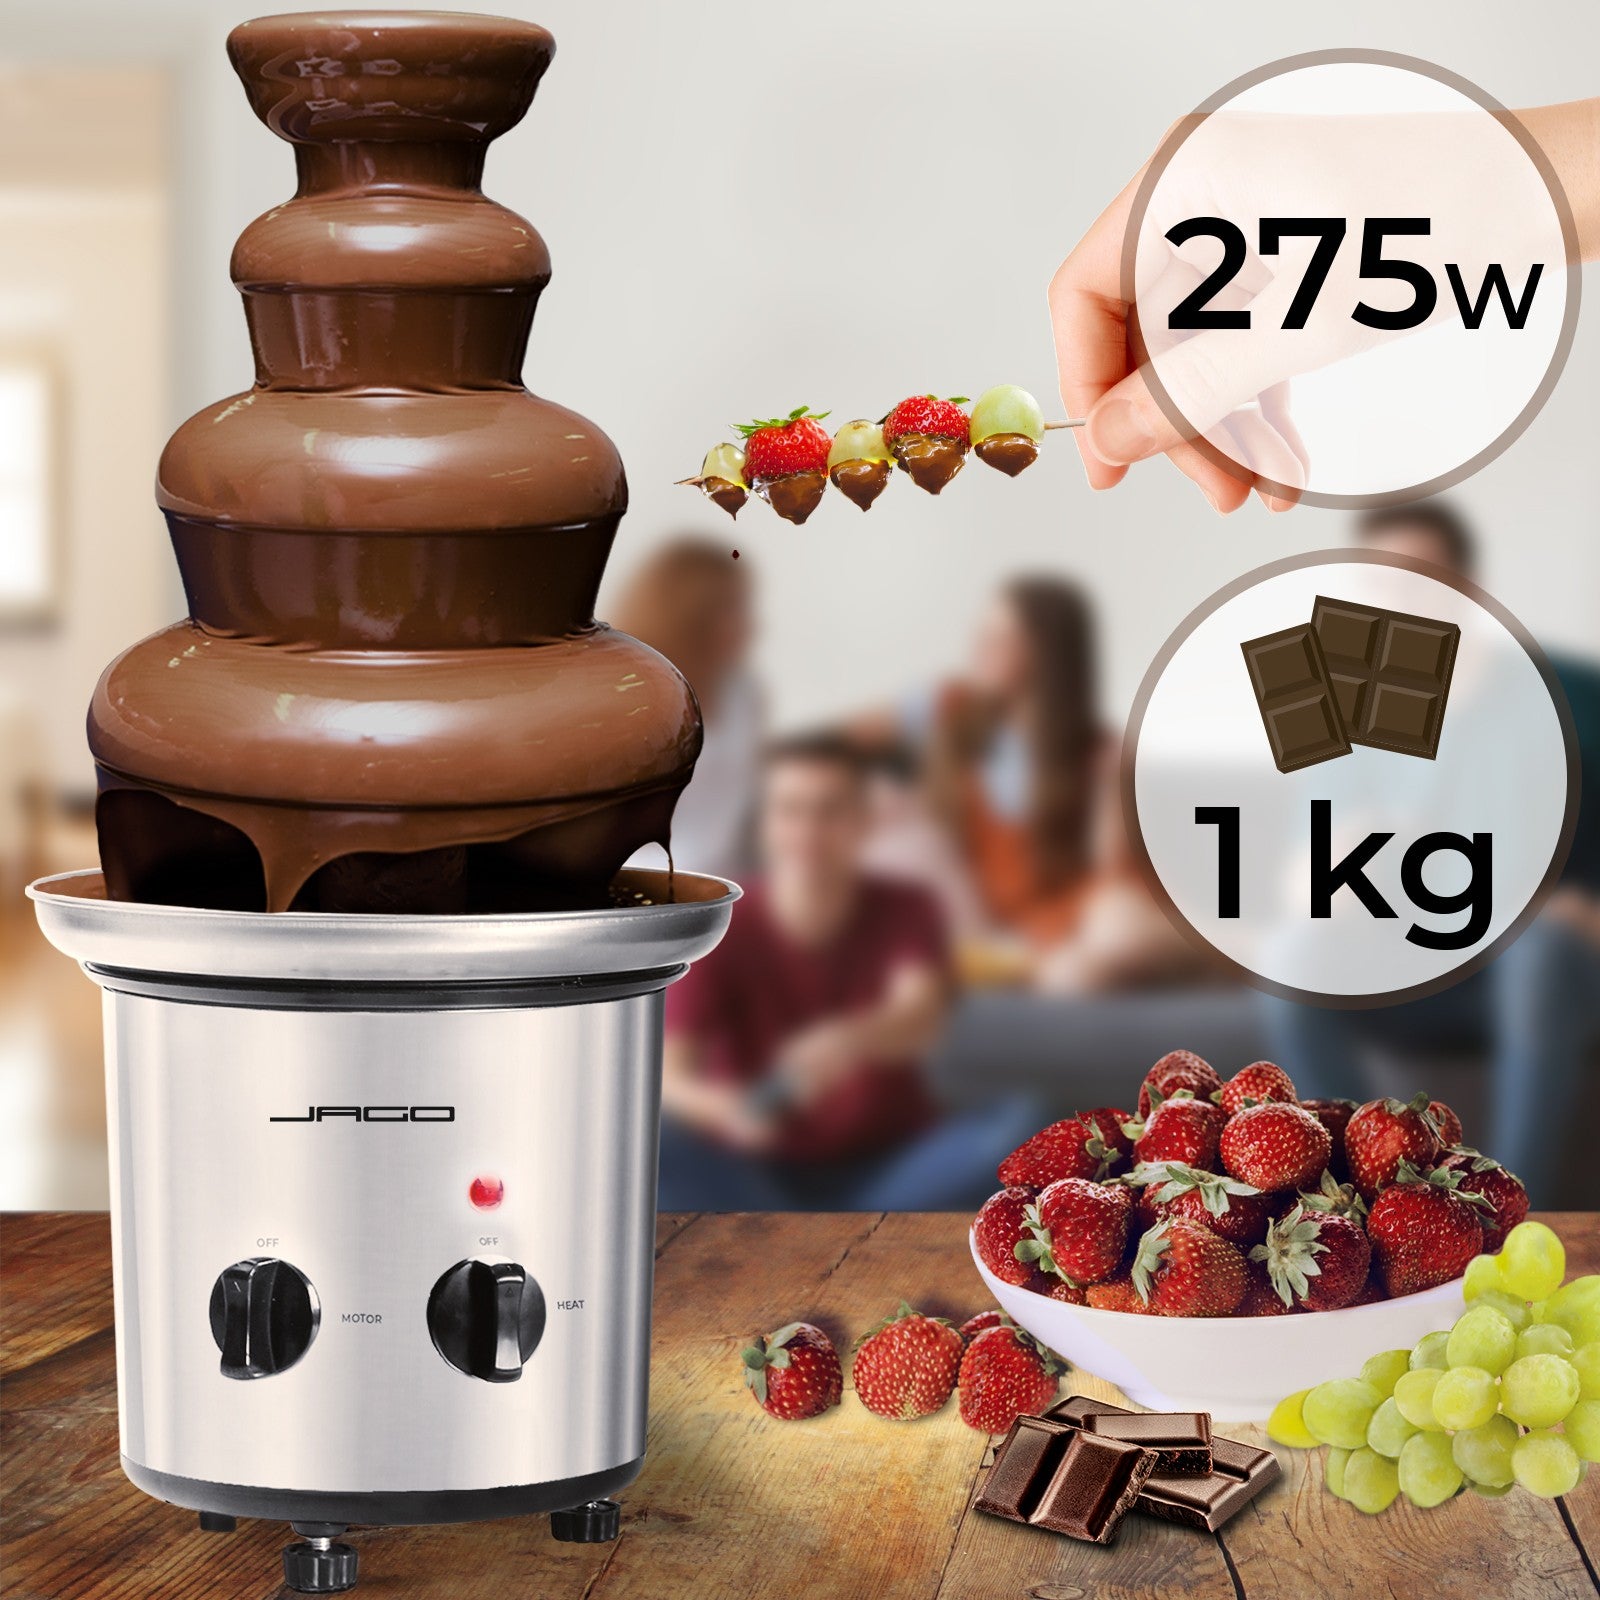 #3 - Chokoladefontæne 275W - 4 Etager, Maks. 1 kg Chokoladekapacitet, sølvfarvet